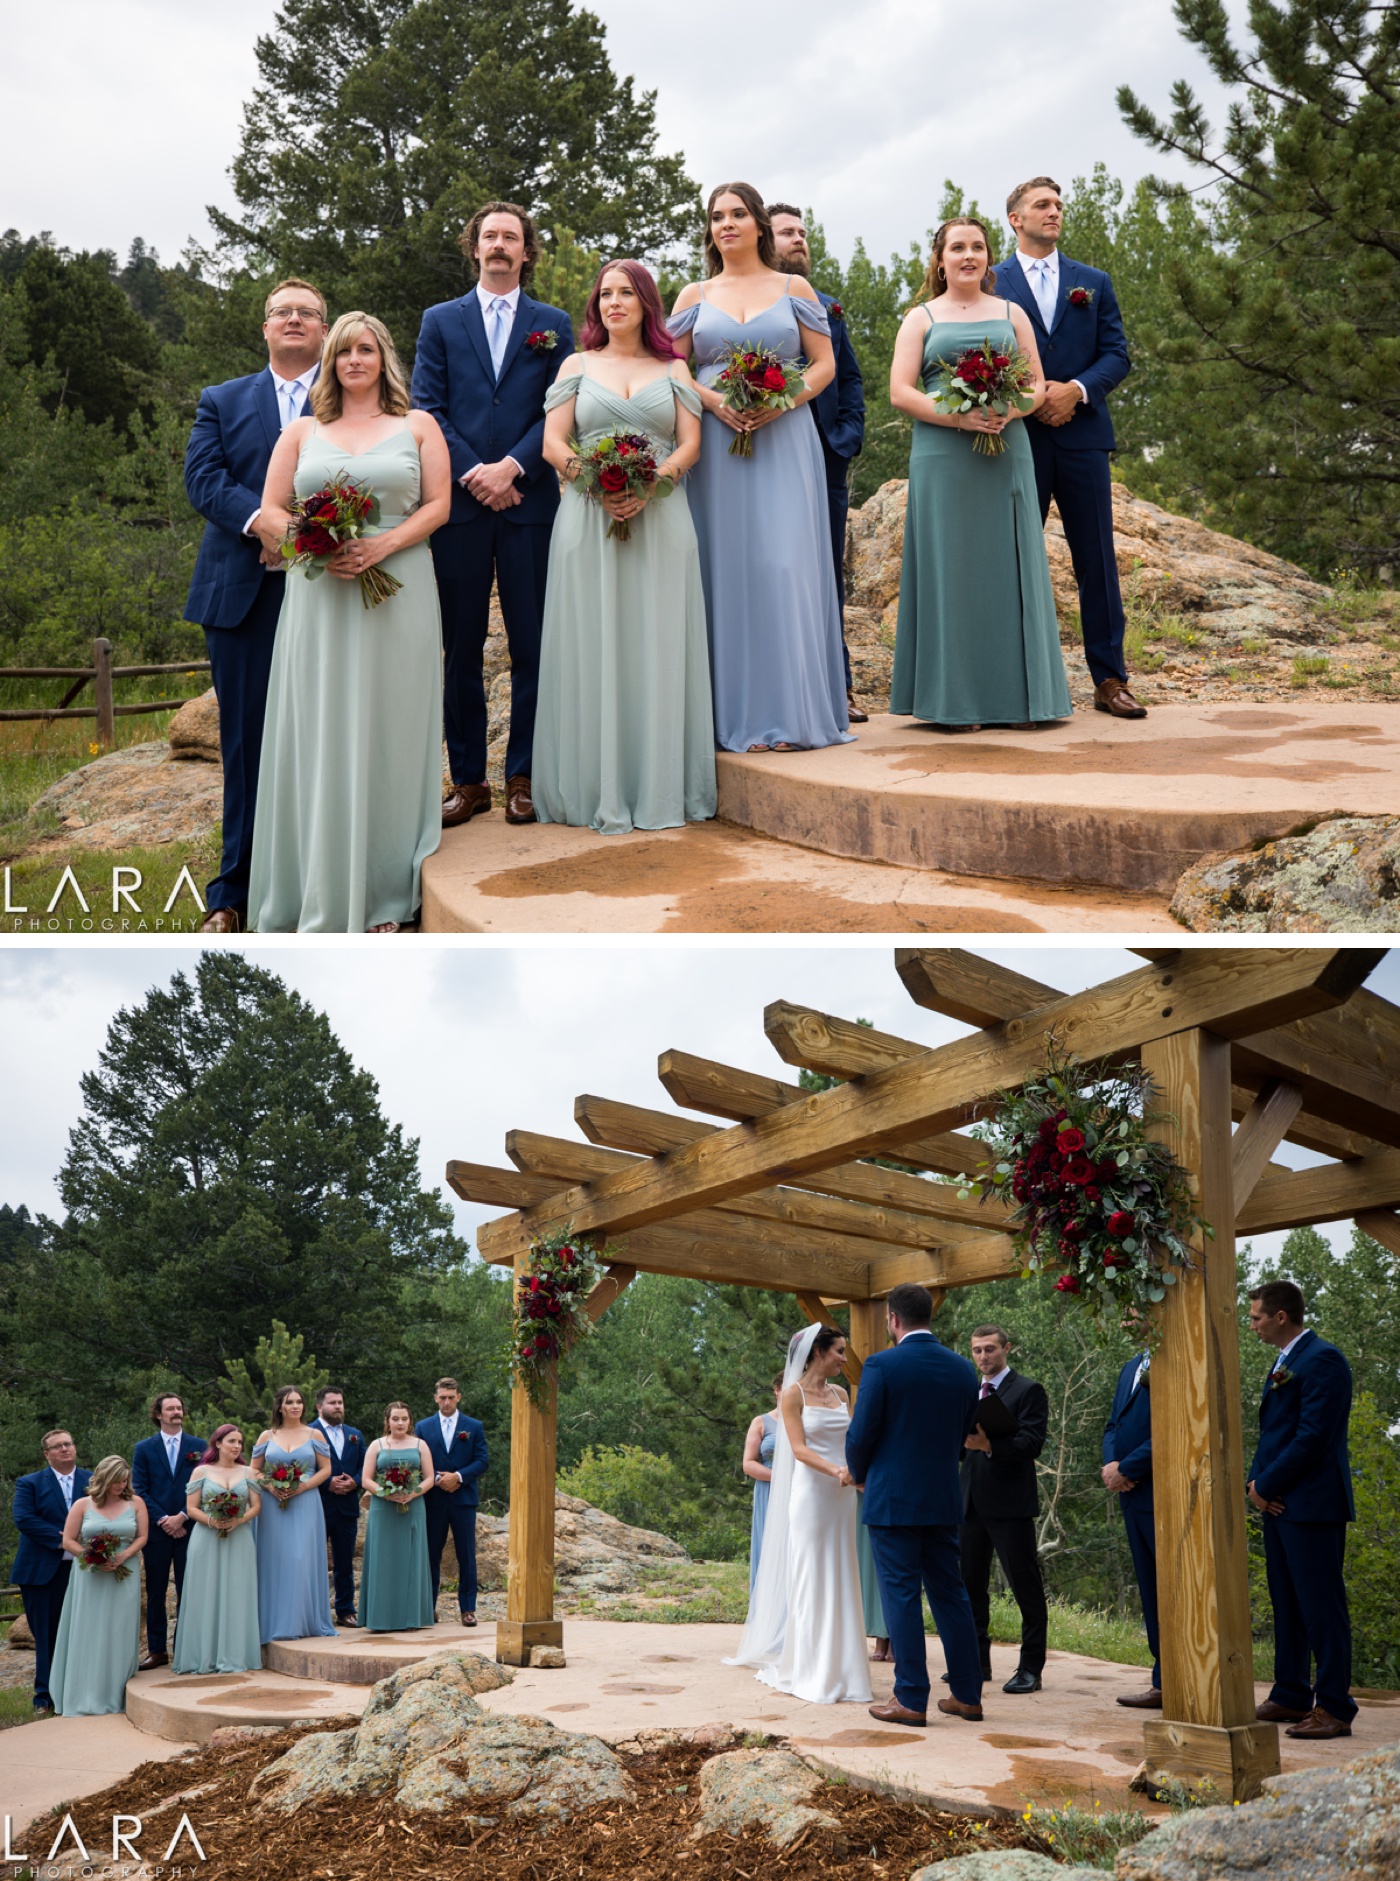 Rustic outdoor wedding ceremony at Taharaa Mountain Lodge, Rustic Wedding in July